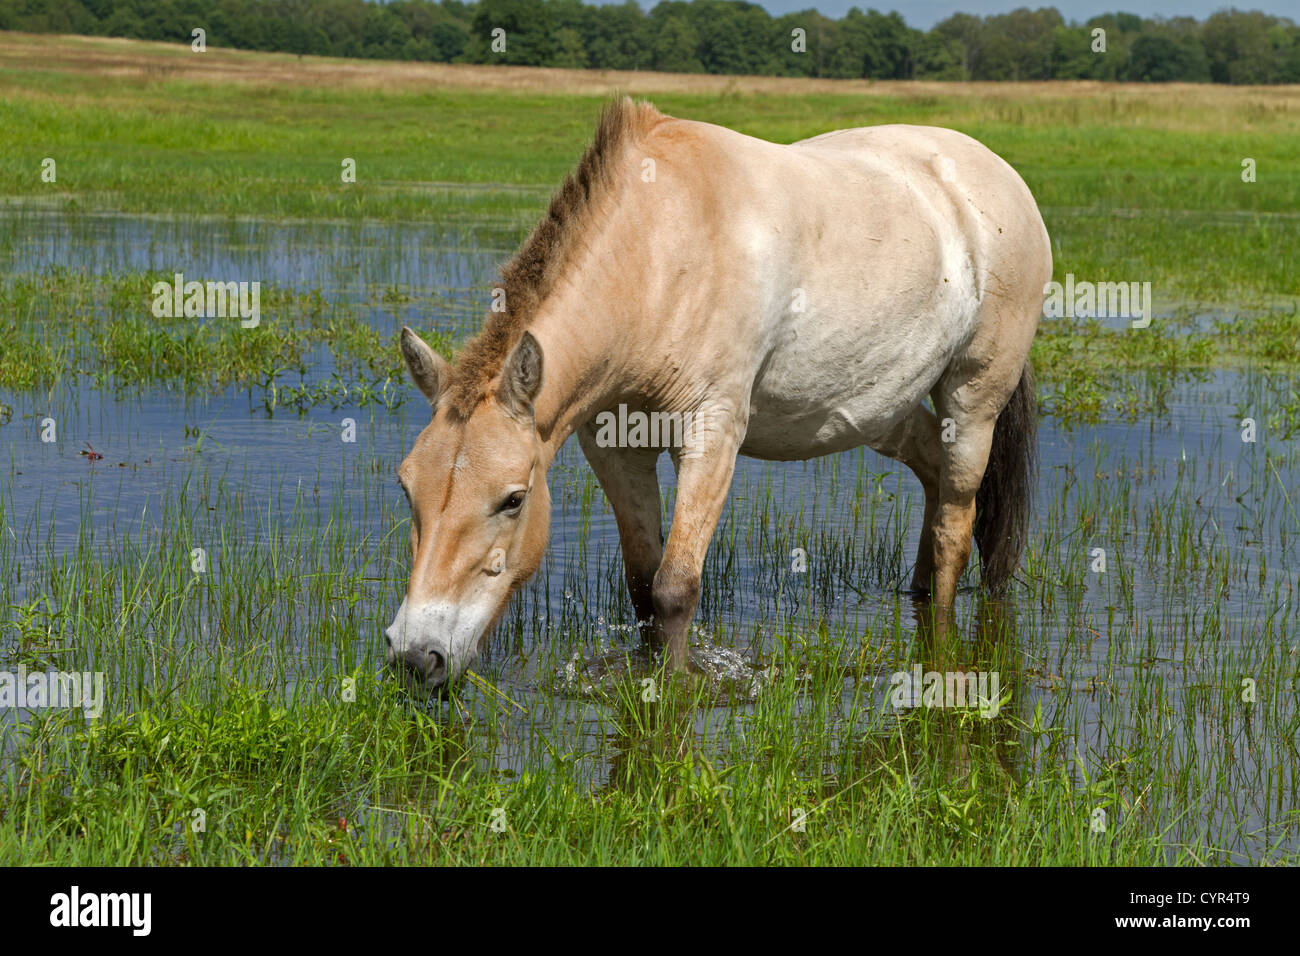 Przewalski's horse / Equus ferus przewalskii Stock Photo